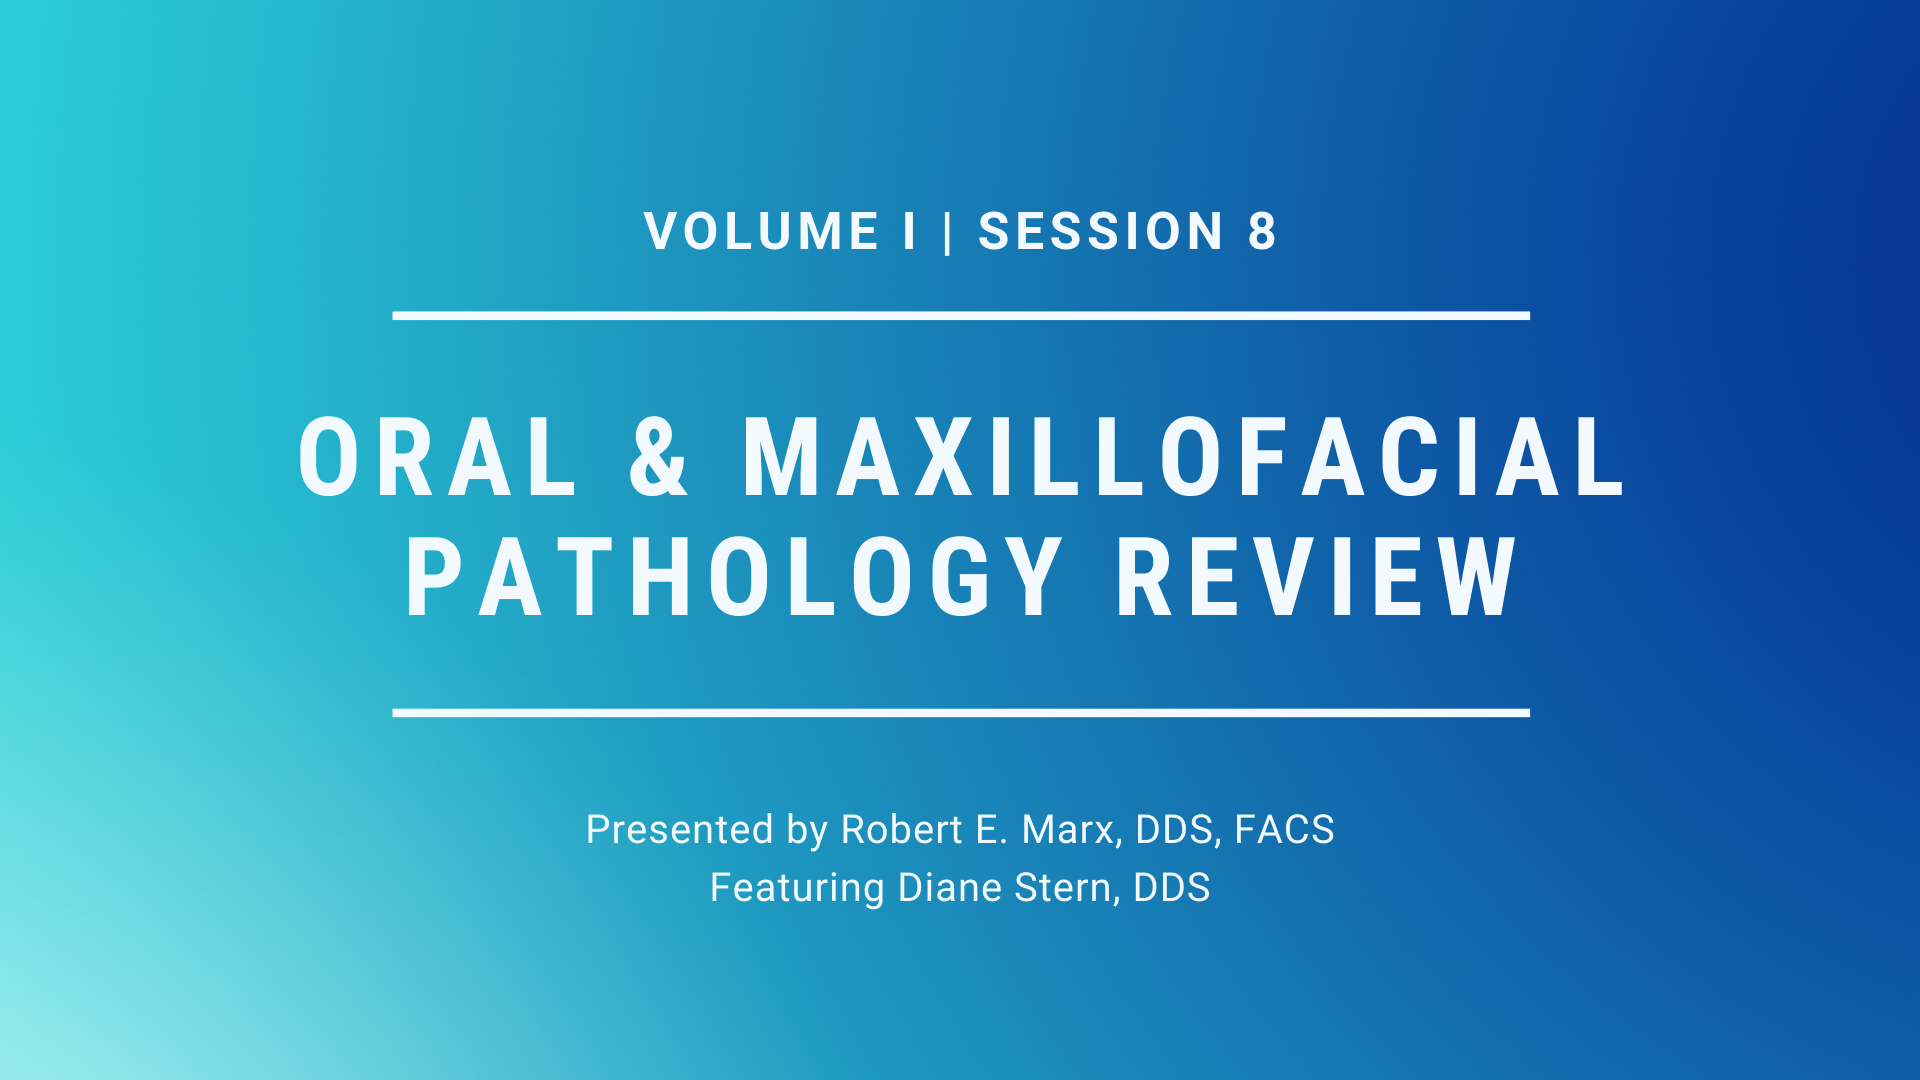 Oral & Maxillofacial Pathology Review – Volume I (OMFS) - Session 8